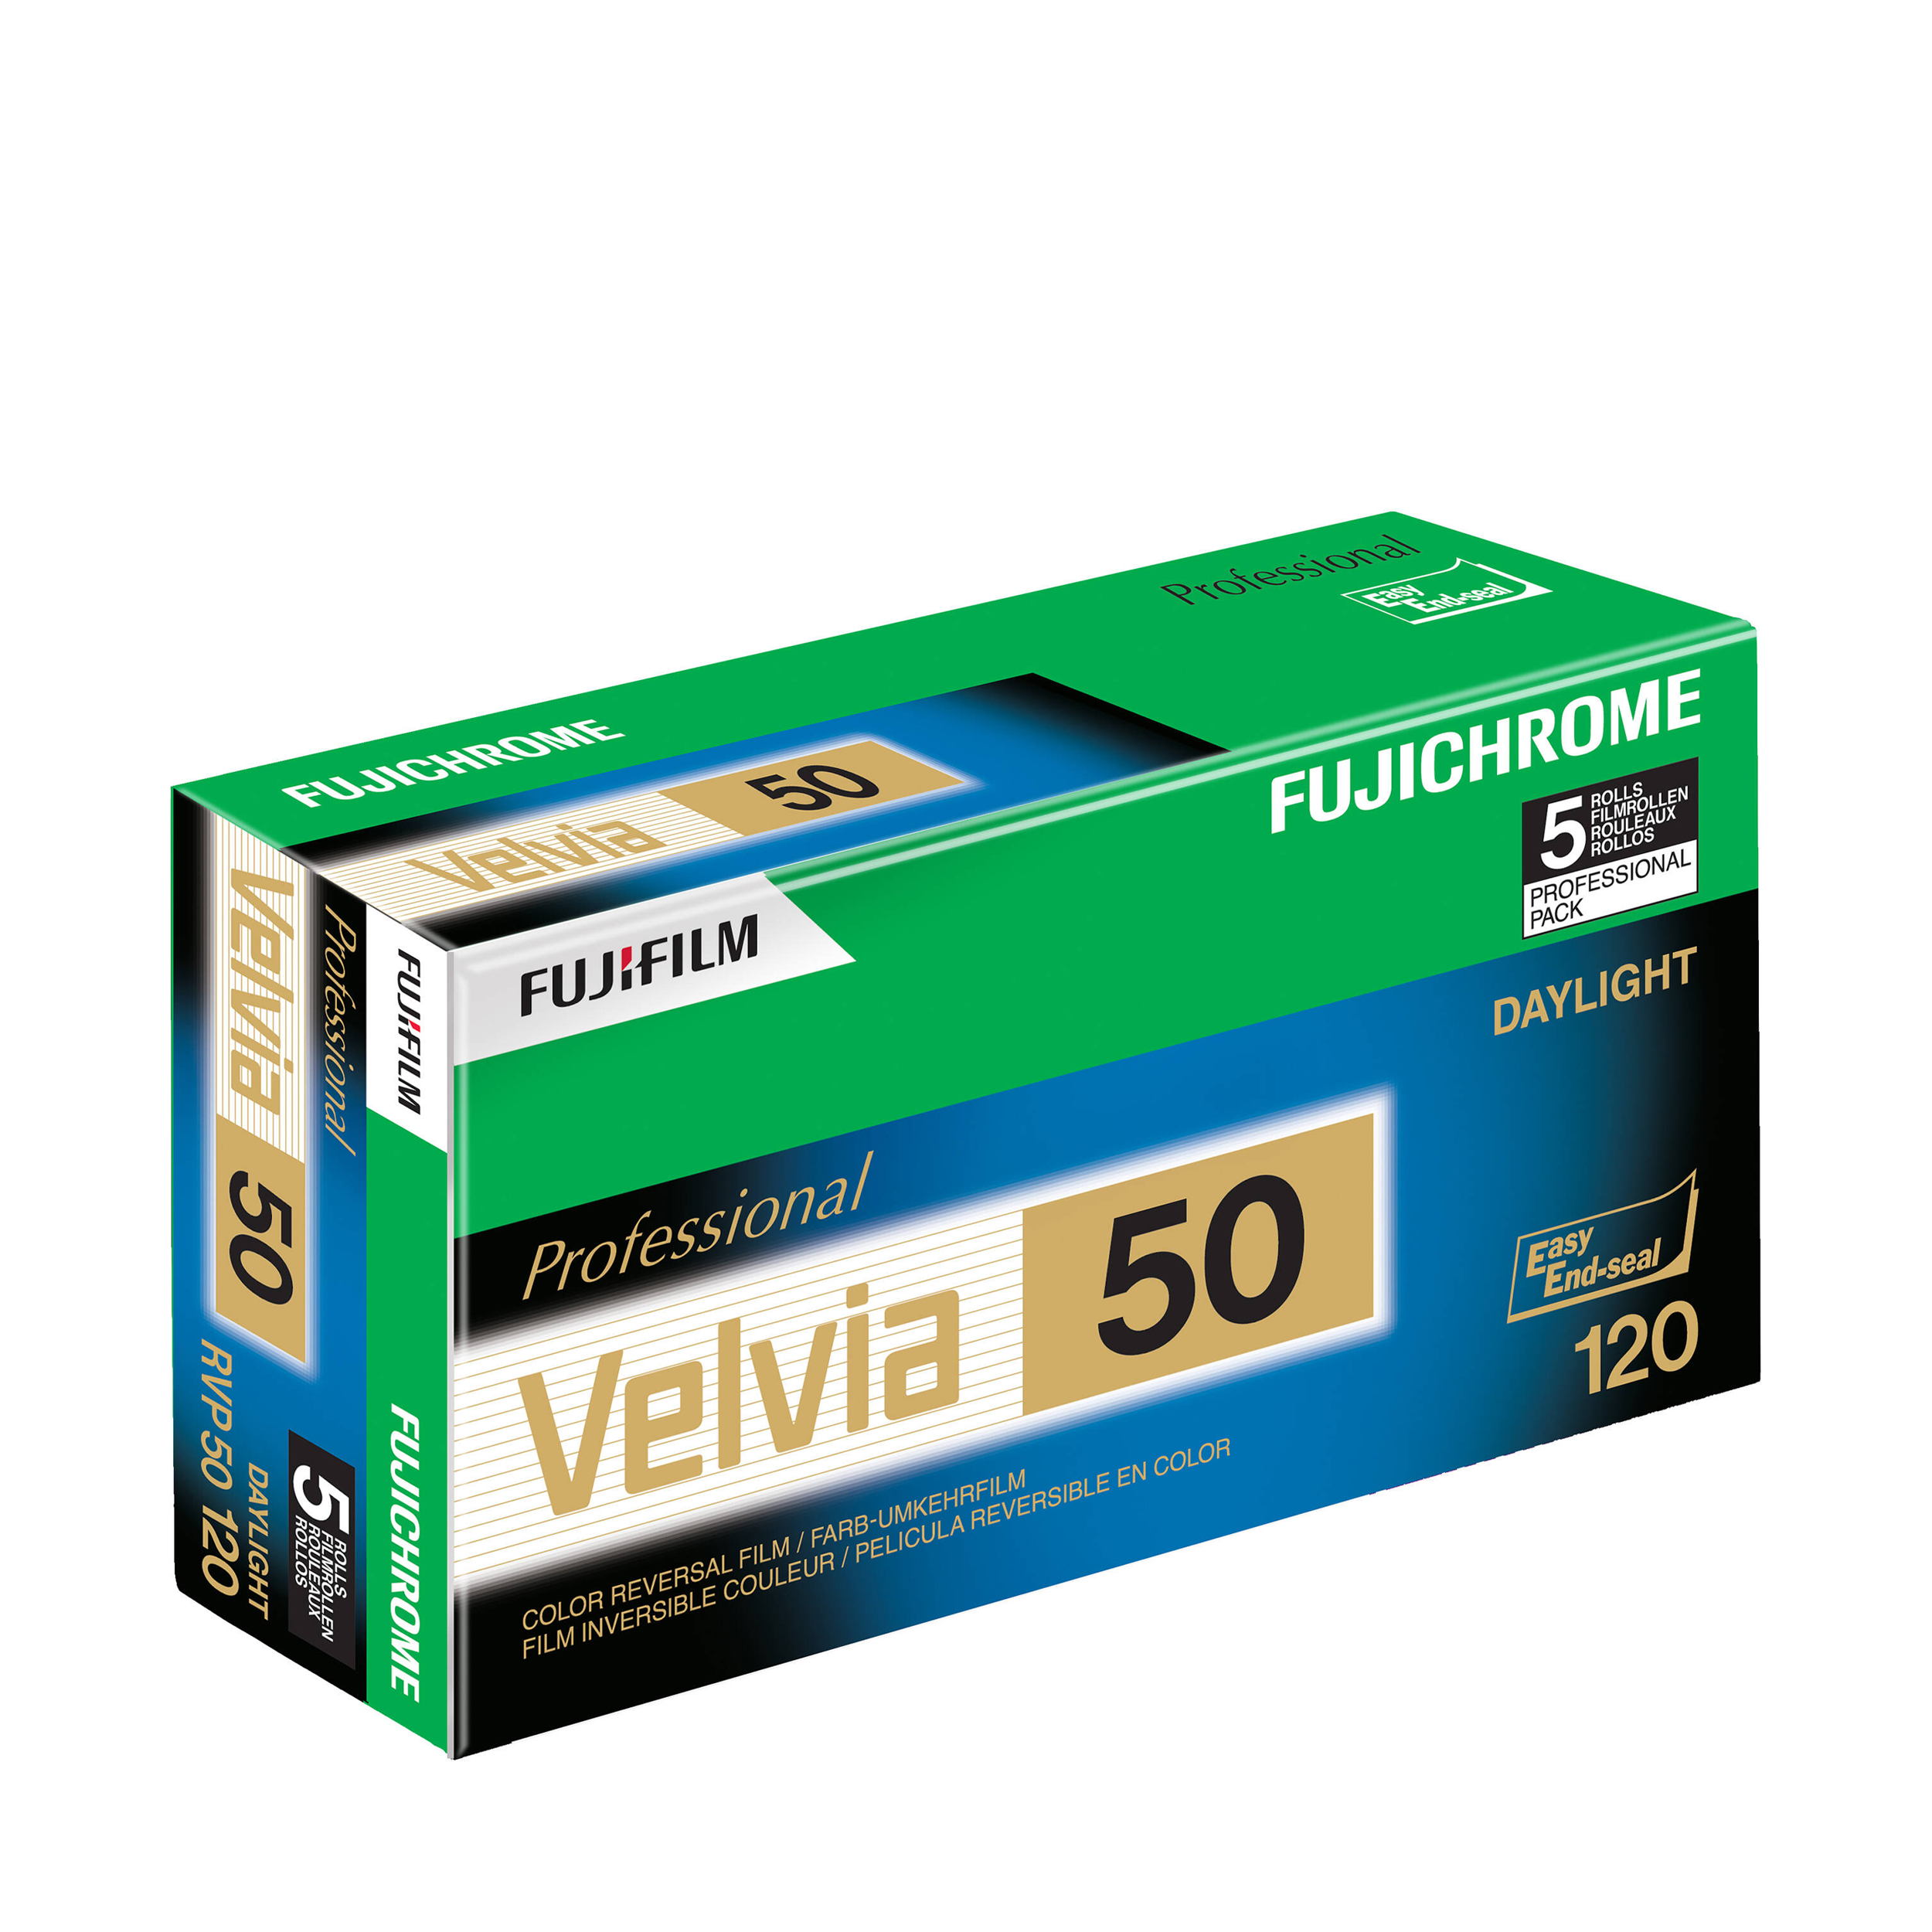 FUJIFILM Fujichrome Velvia 50 Professional RVP 50 Color Transparency Film (120 Roll Film, 5 Pack)